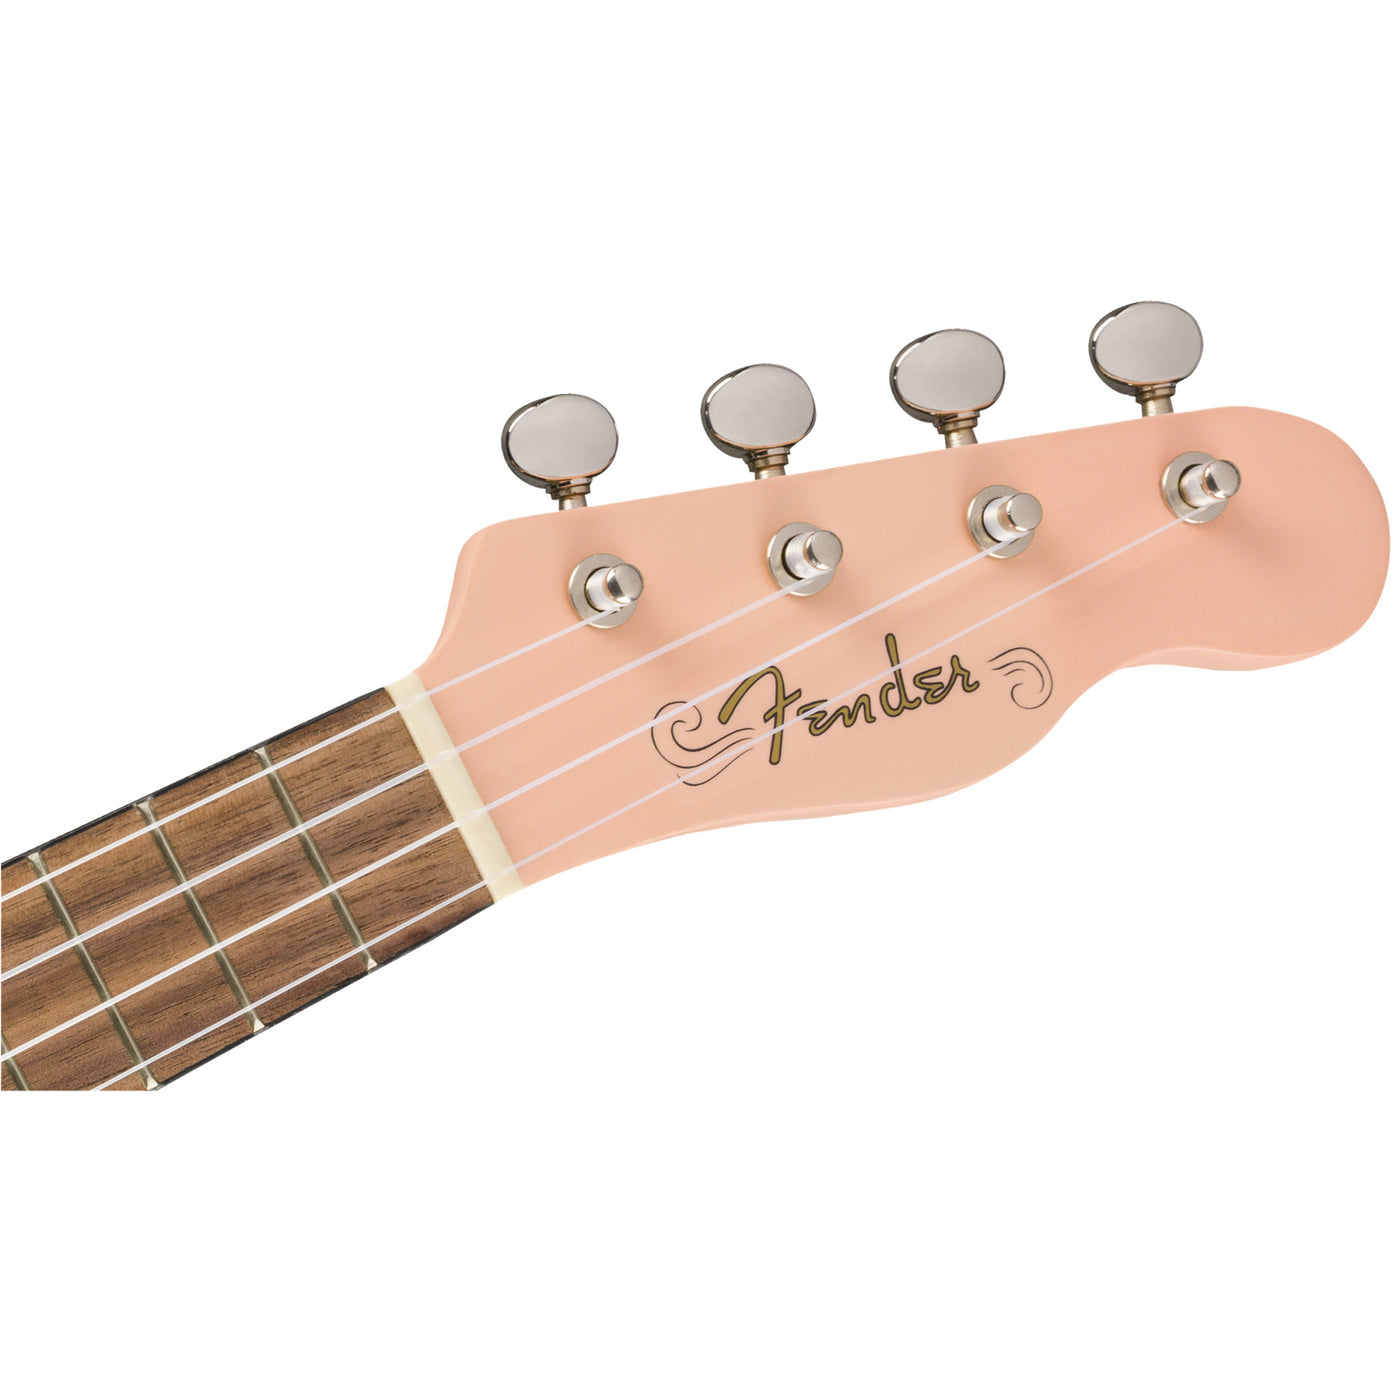 Fender Venice Soprano Ukulele, Shell Pink (0971610556)